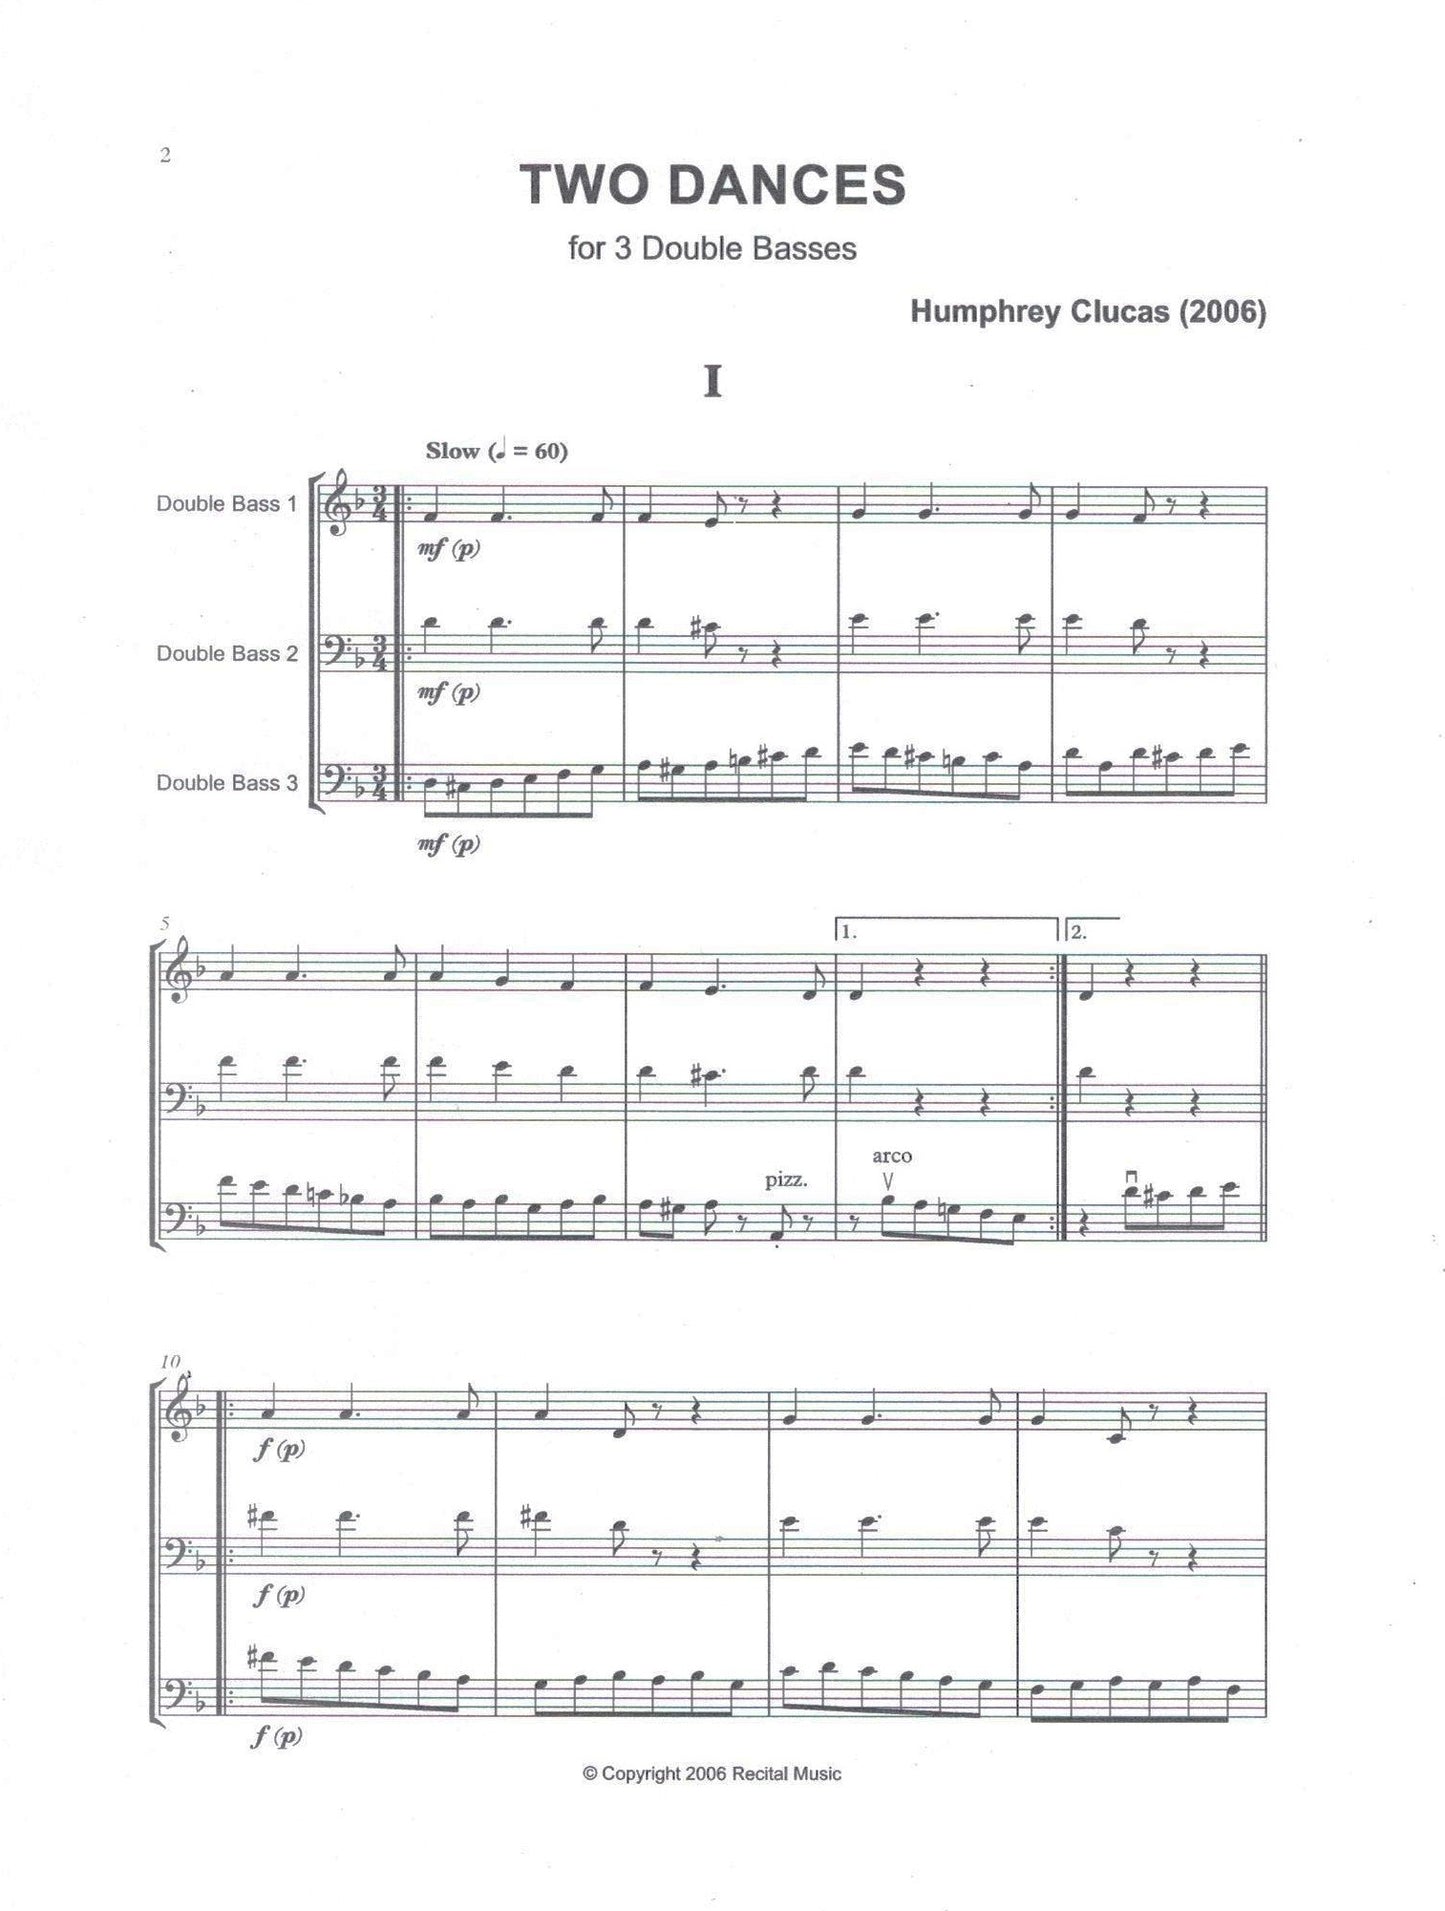 Humphrey Clucas: Bass Trios for 3 double basses